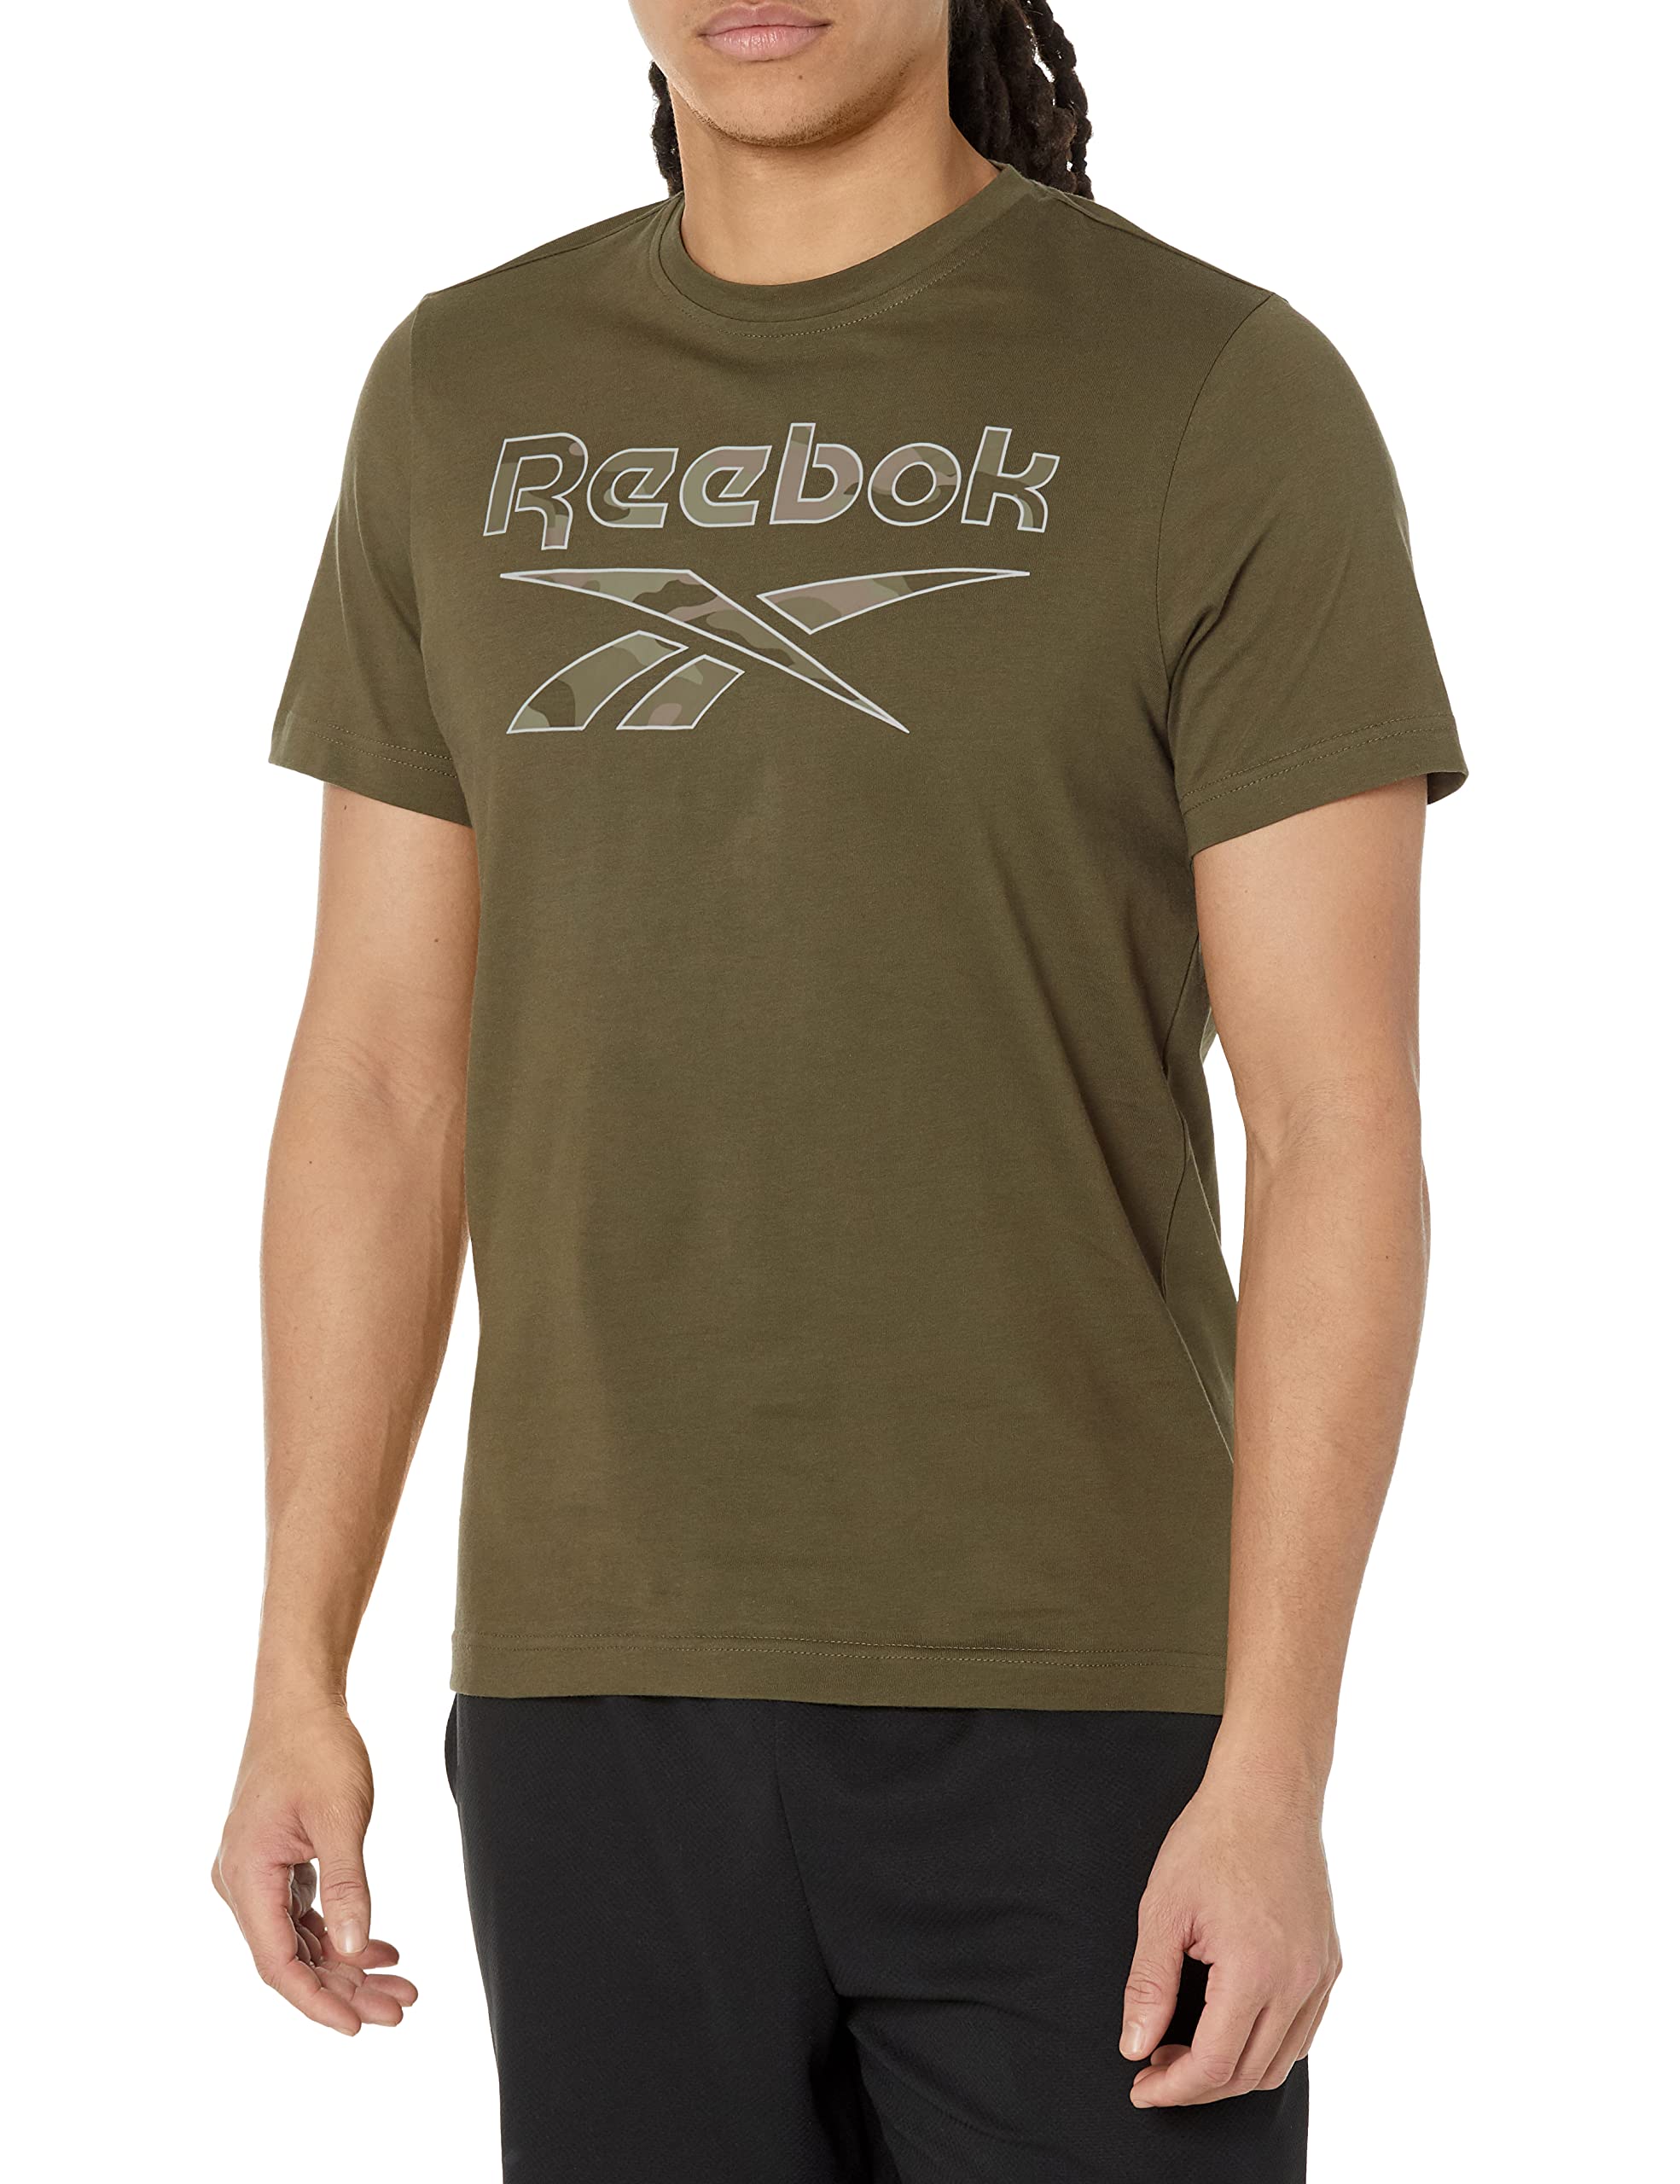 Reebok Mens Standard Big Tee, Army greencamo Logo, Large